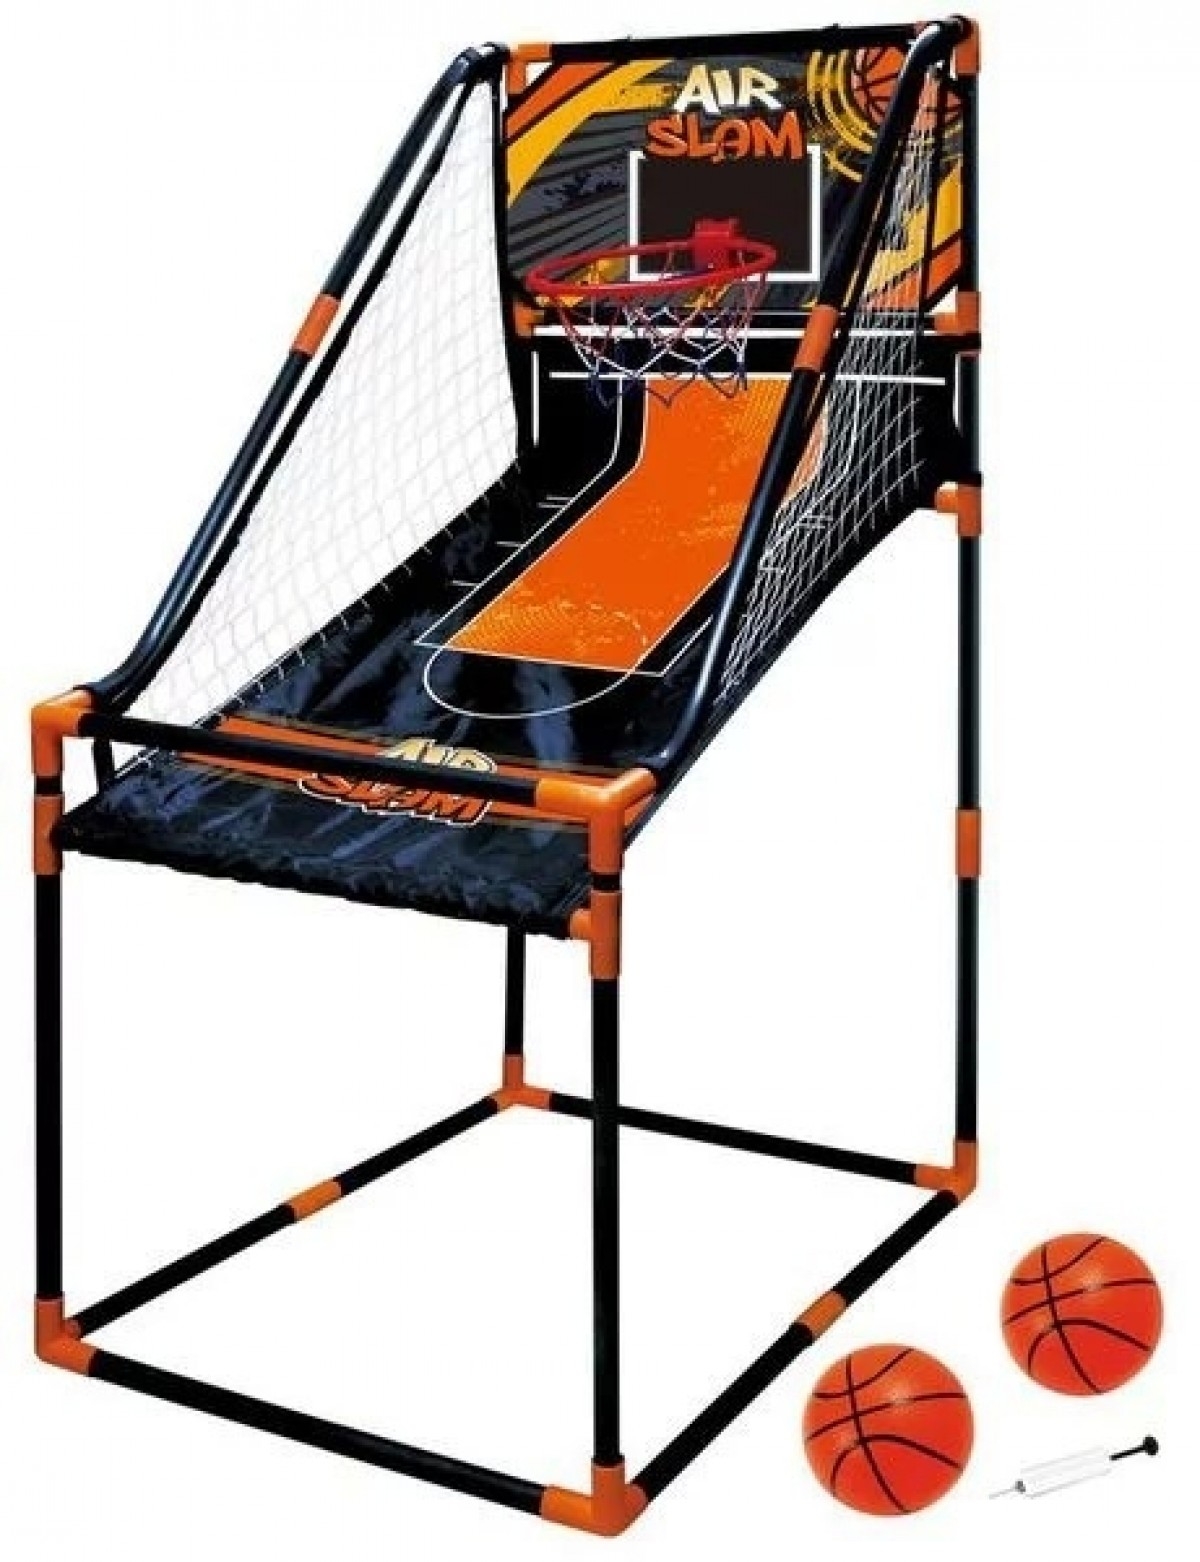 Lancaster 2 Player Junior Home Electronic Scoreboard Arcade Basketball Hoop Game 